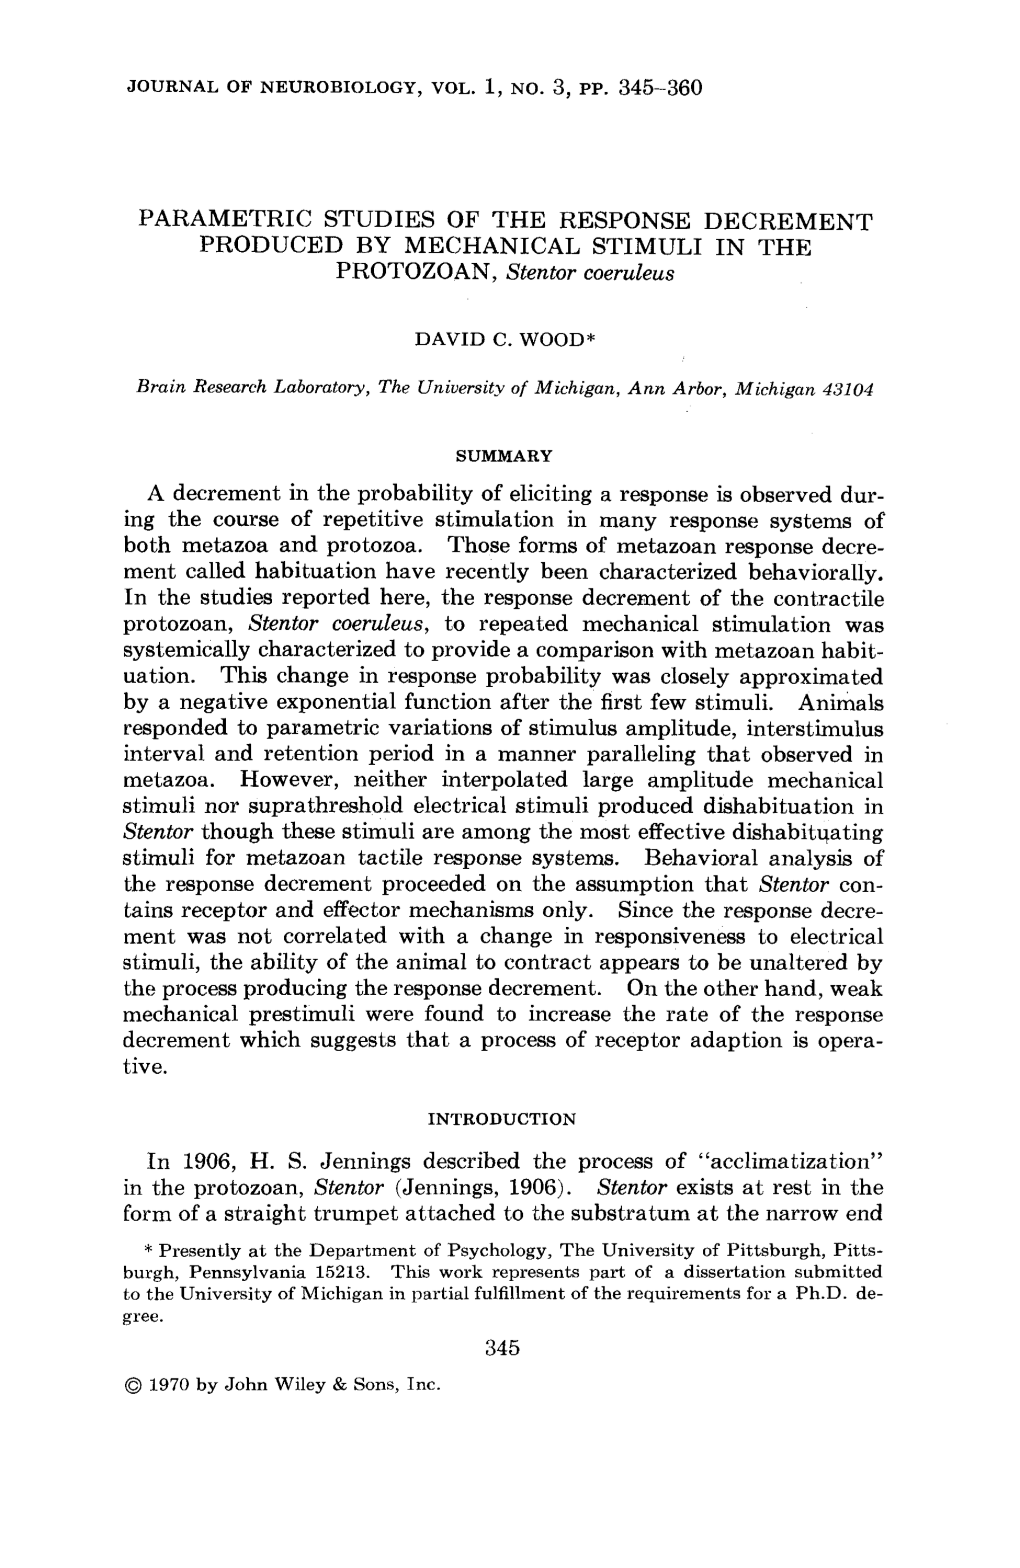 Journal of Neurobiology, Parametric Studies of The